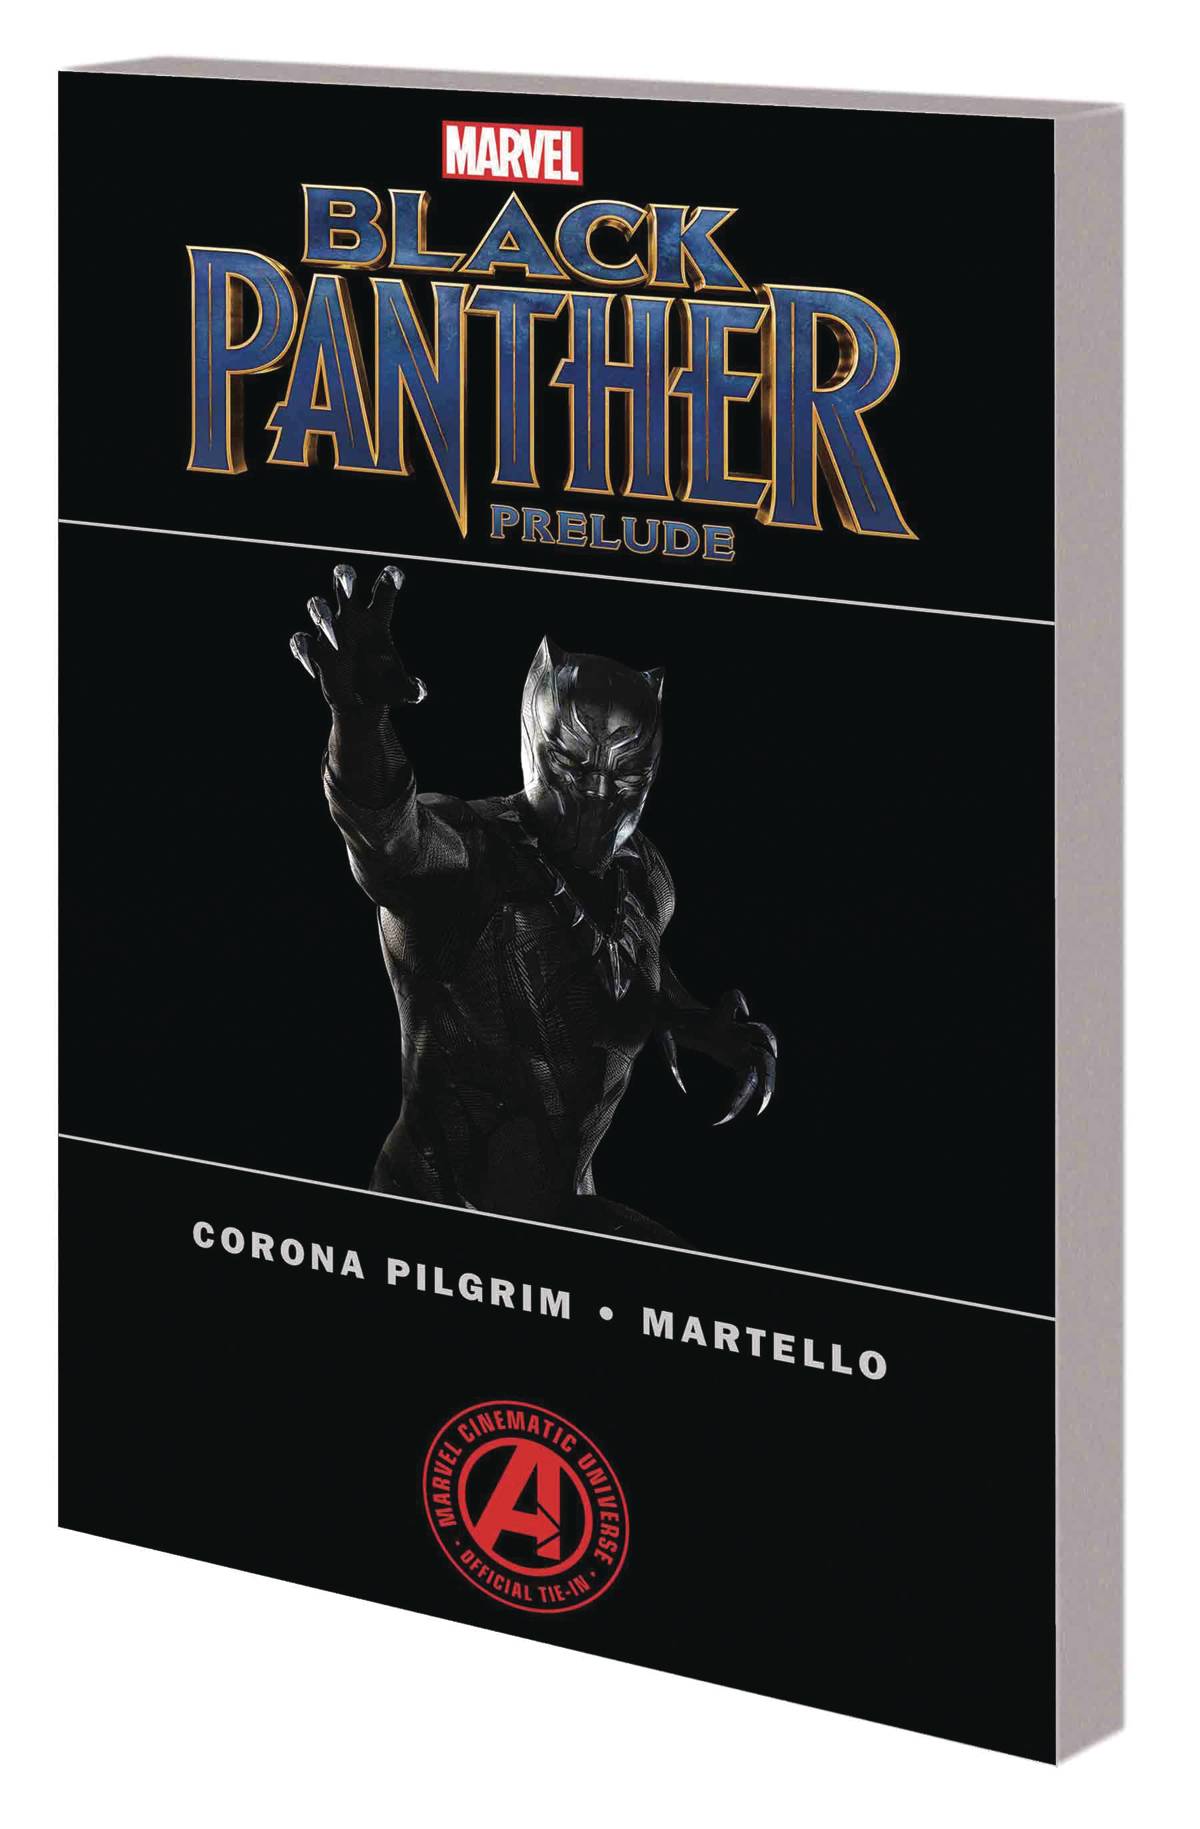 Marvels Black Panther Prelude Graphic Novel